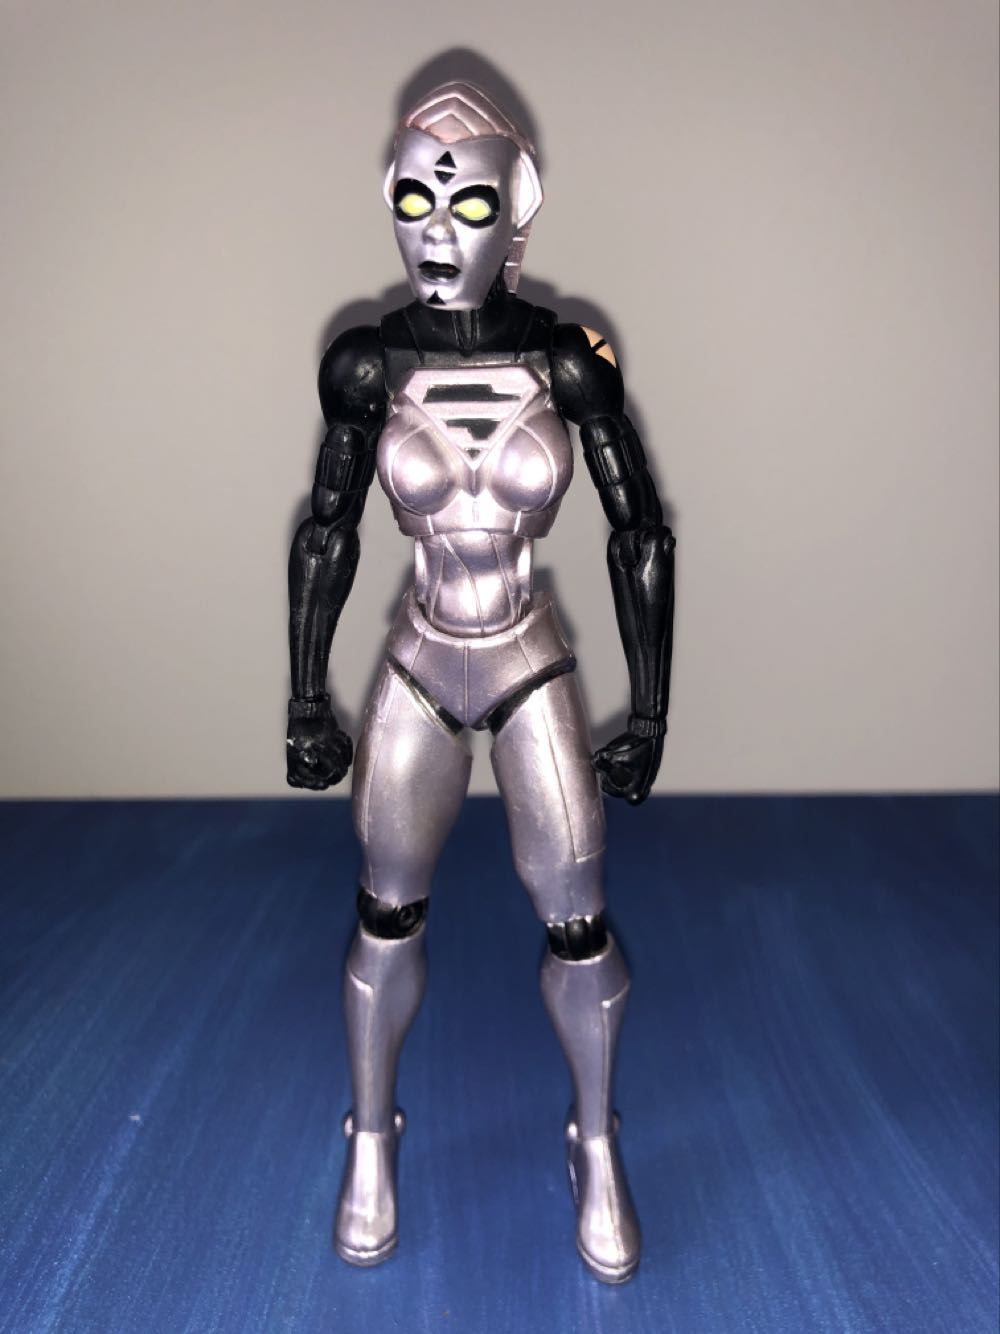 Natasha Irons - DC action figure collectible - Main Image 1